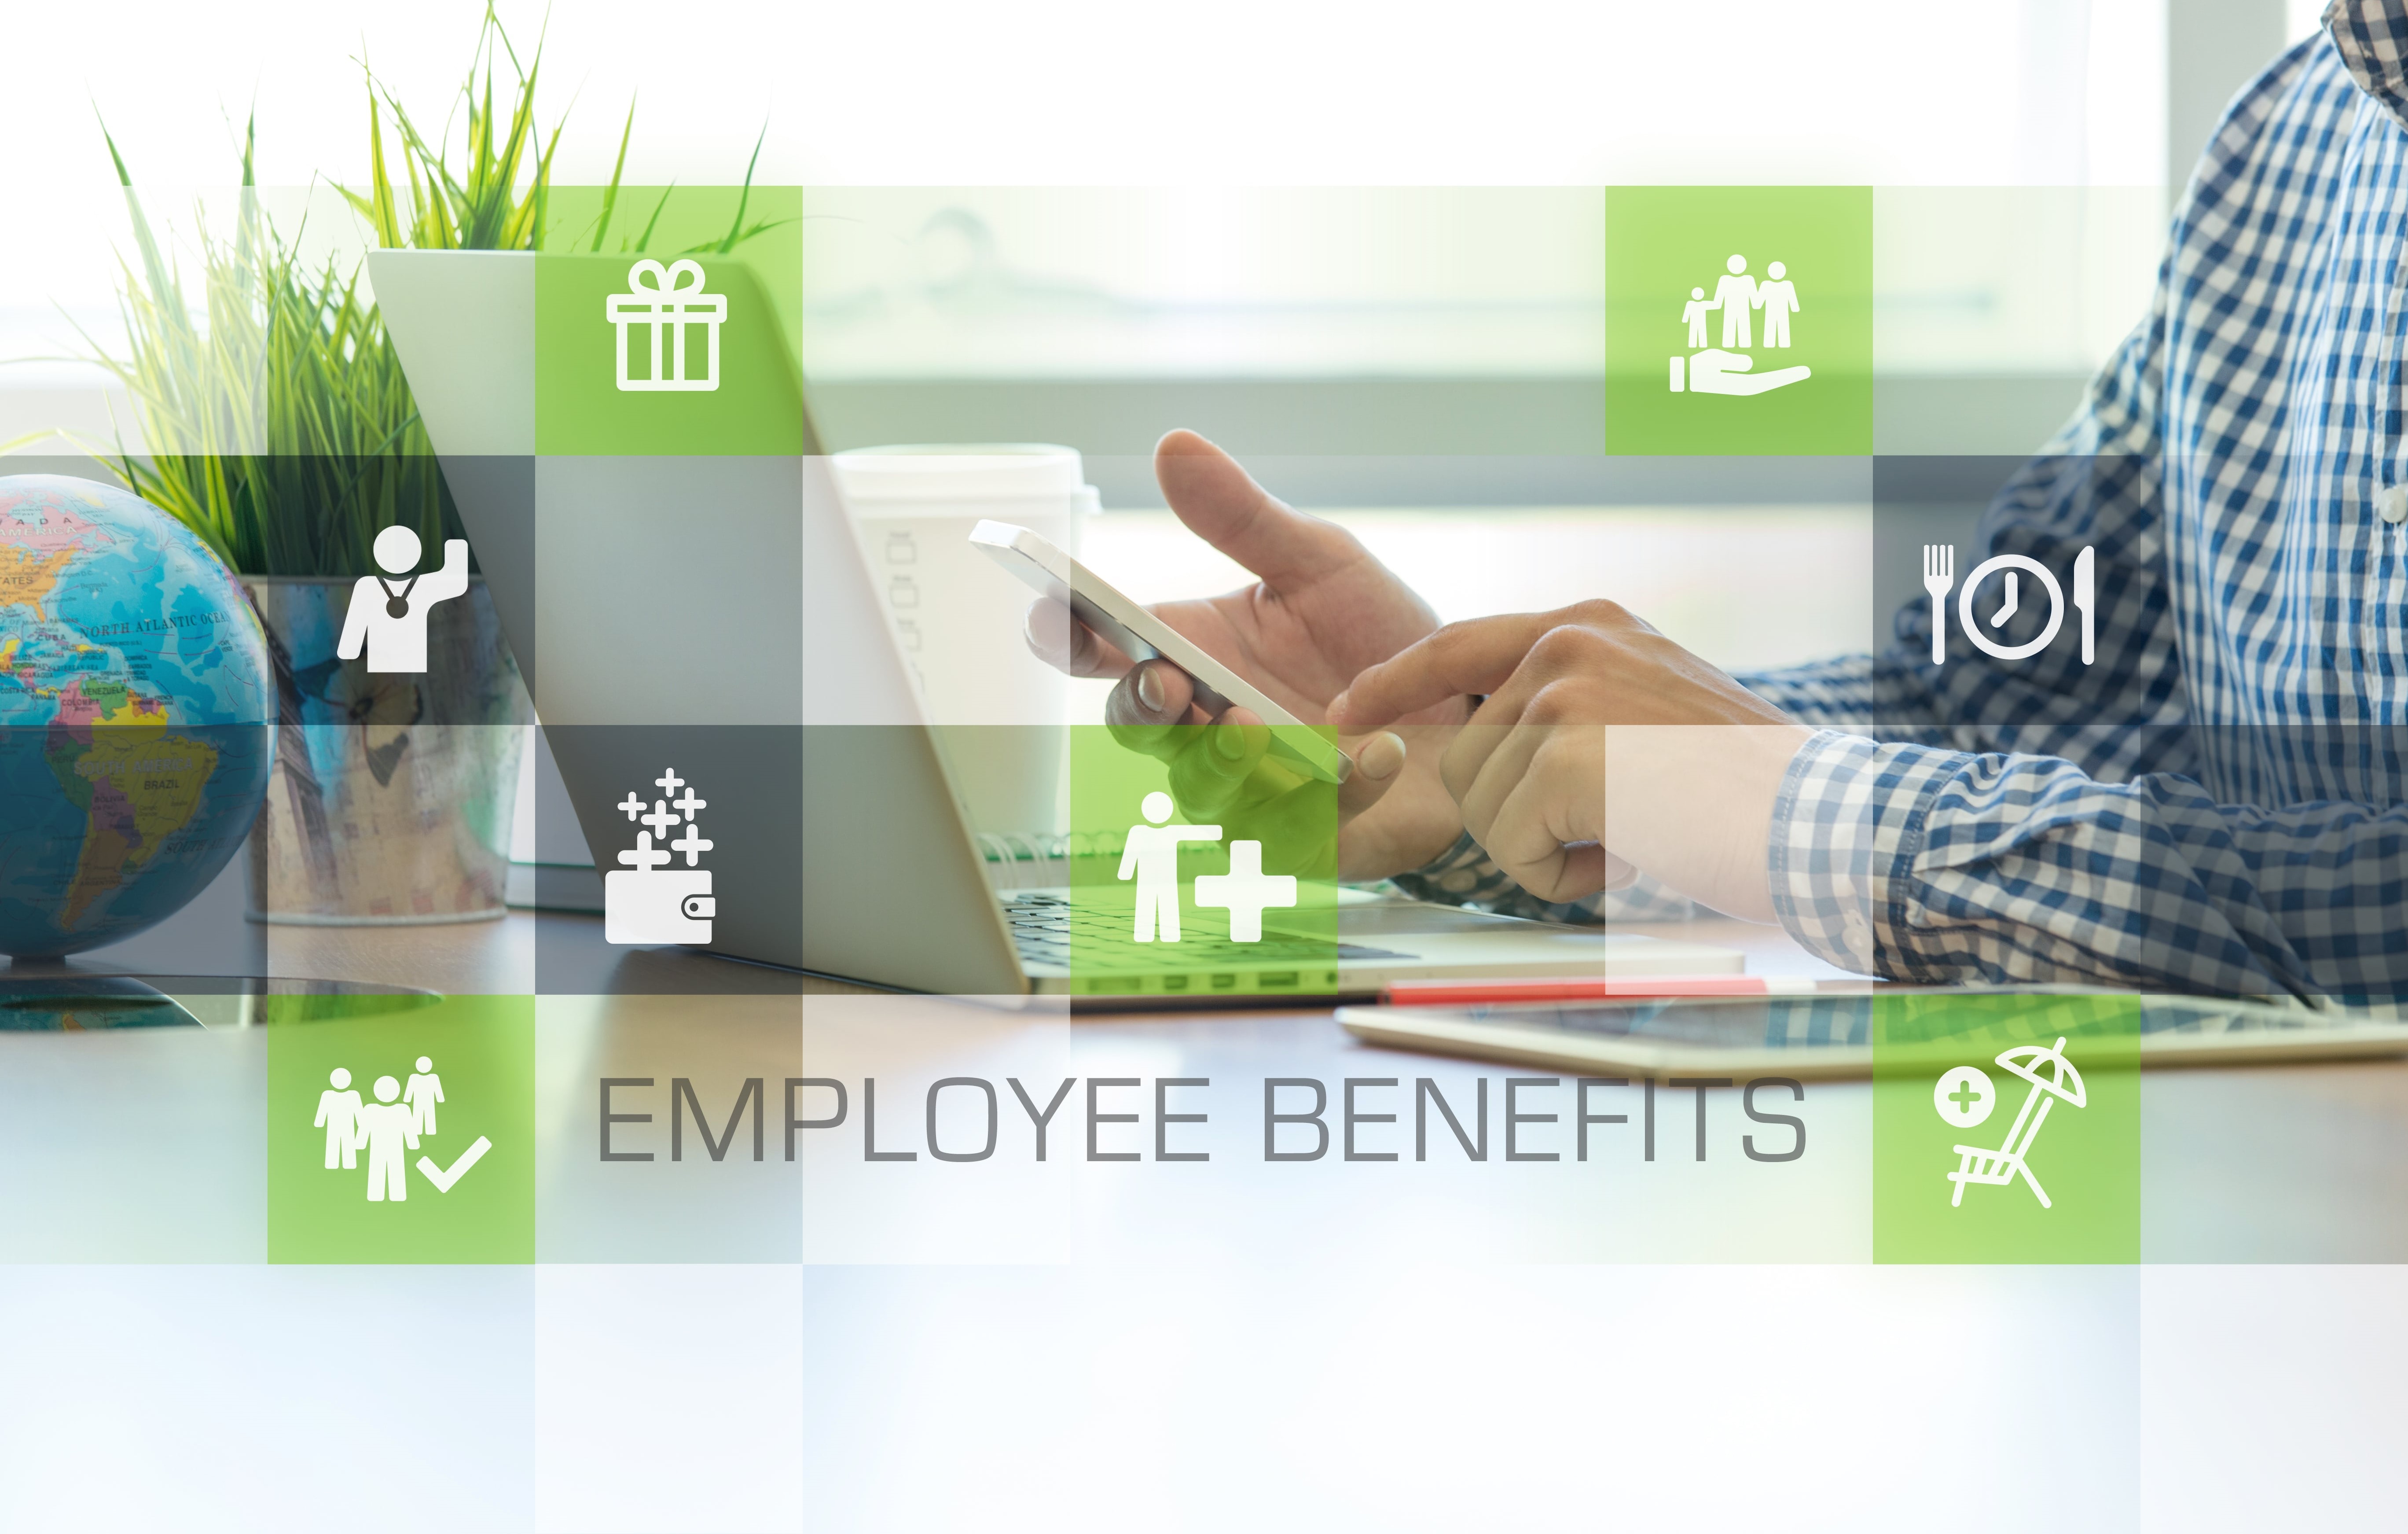 Examples of Employee Benefits